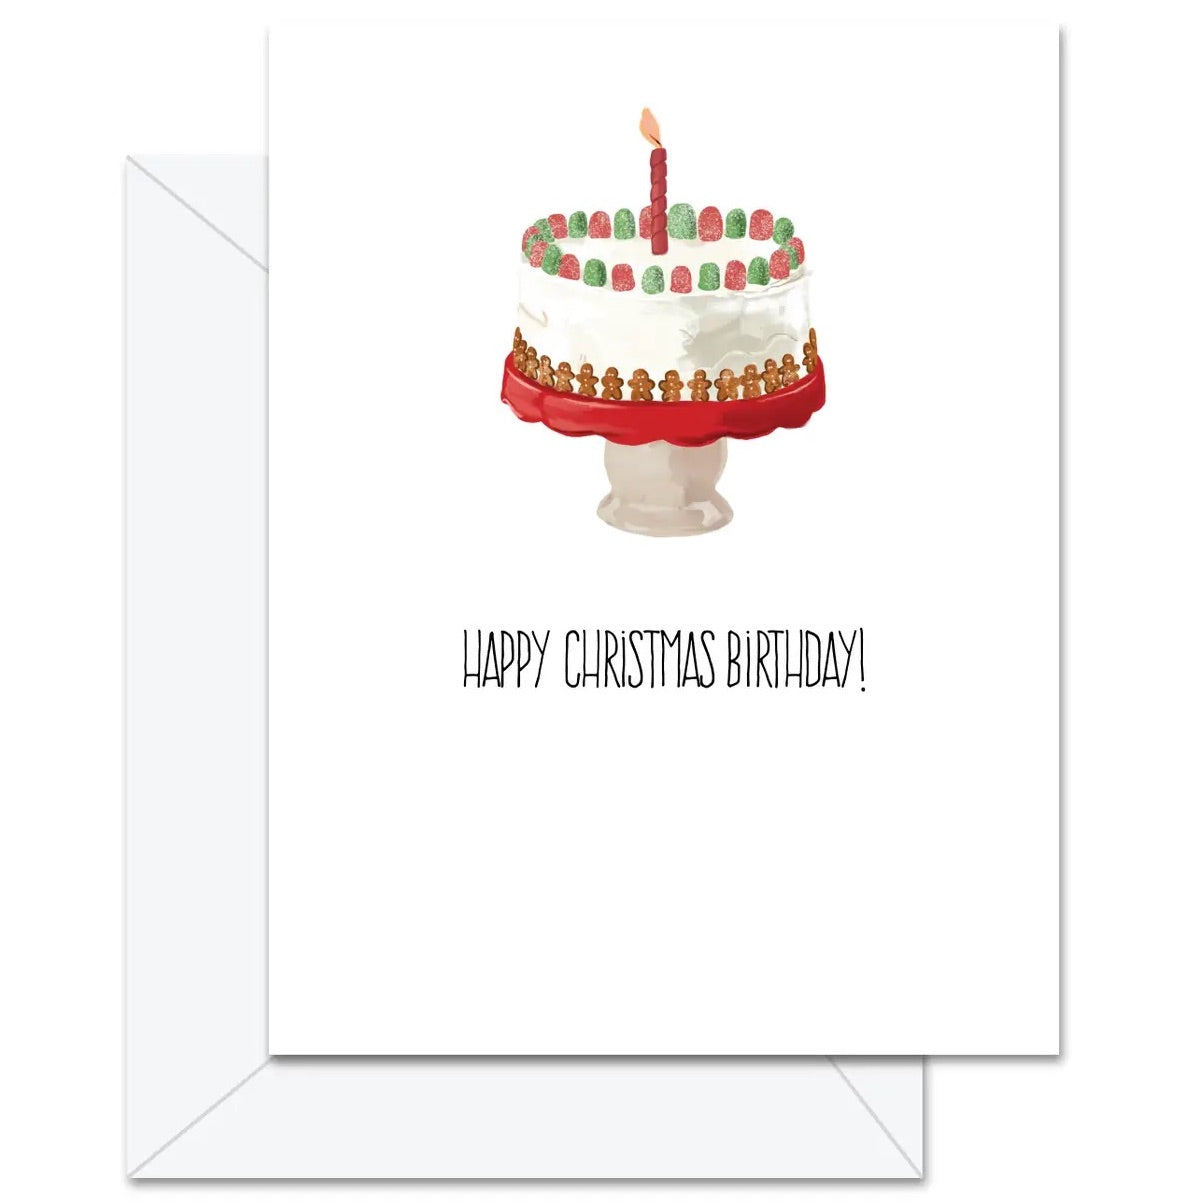 Happy Christmas Birthday Greeting Card